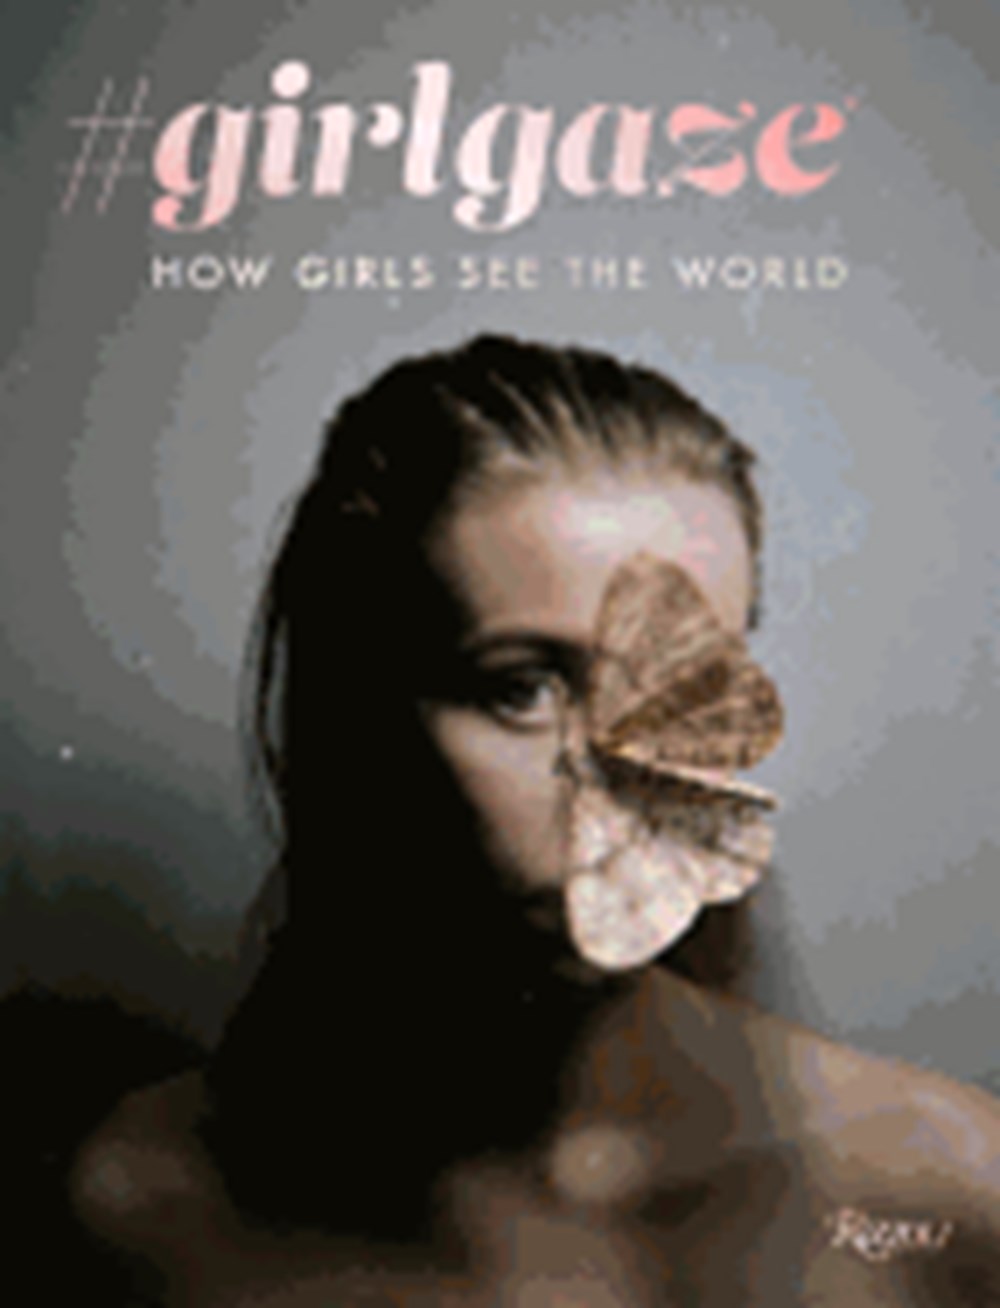 #Girlgaze: How Girls See the World